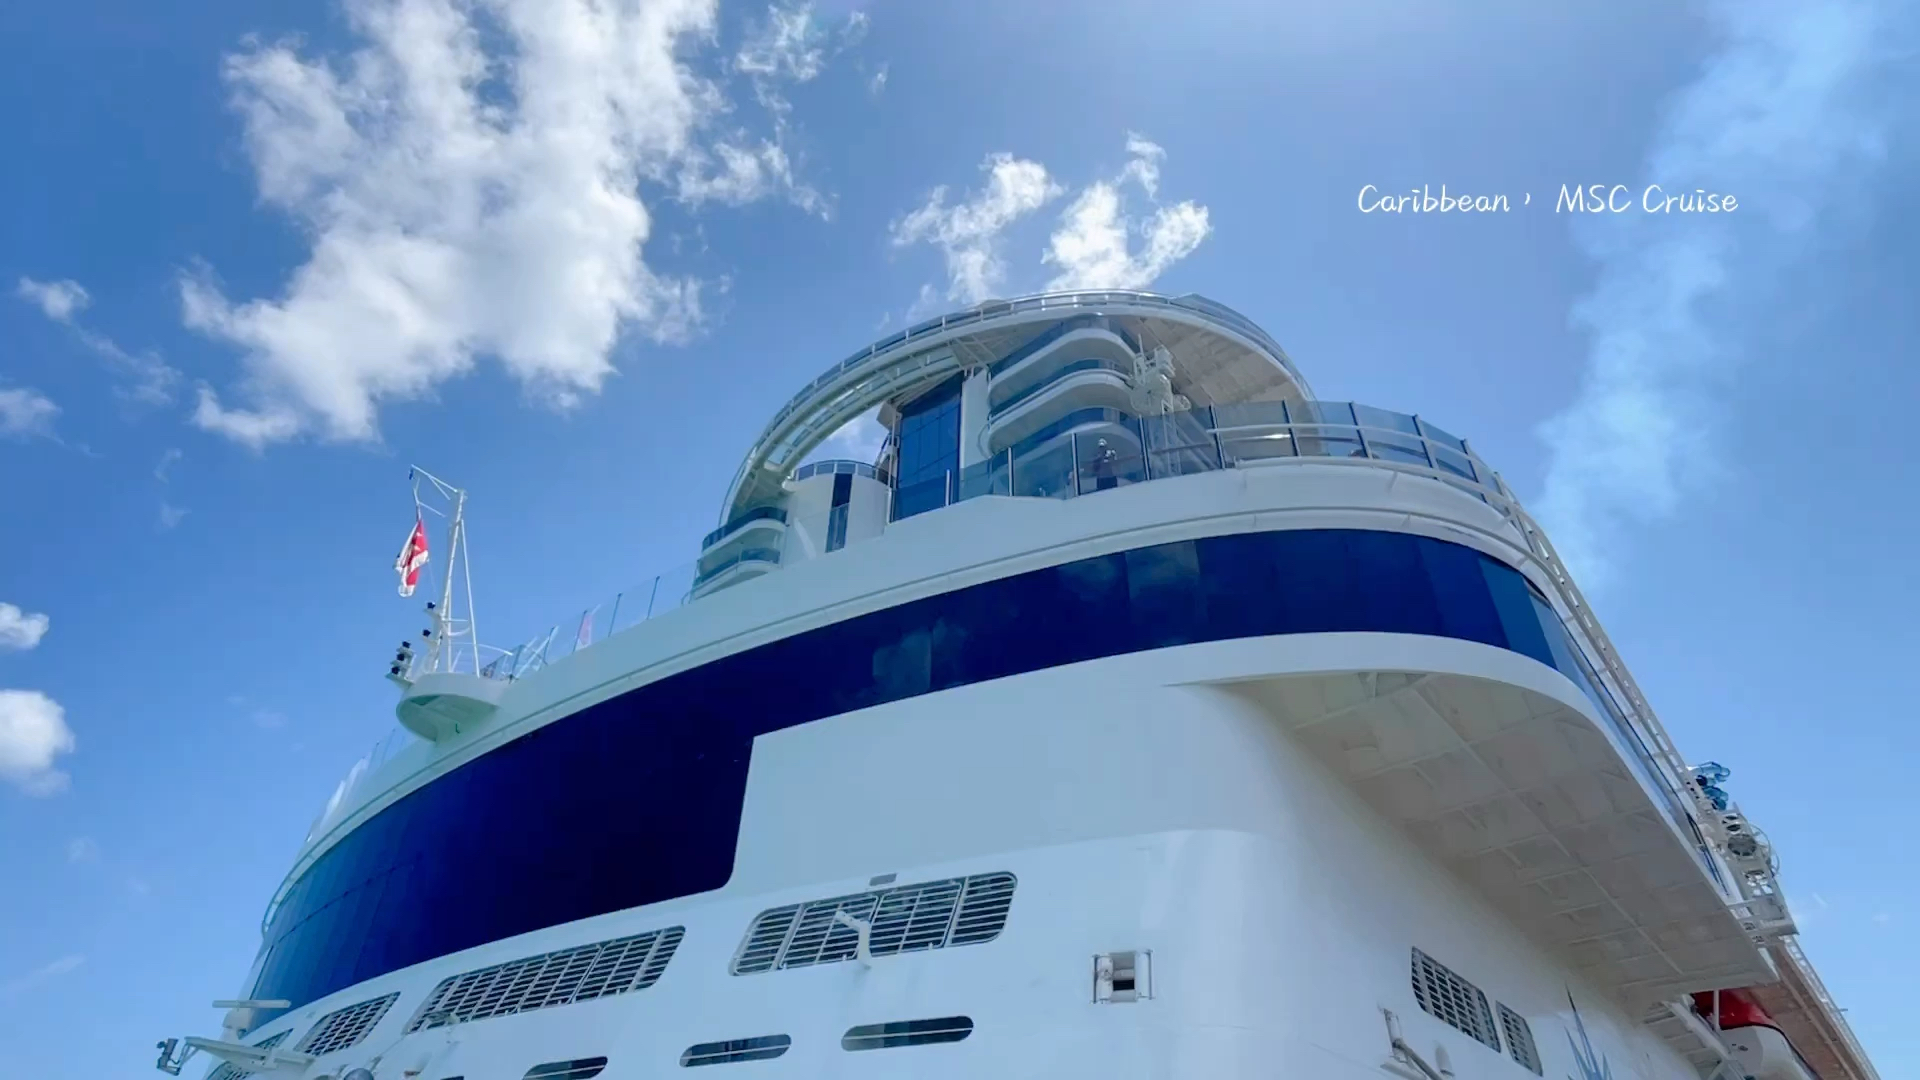 Caribbean, MSC Cruise